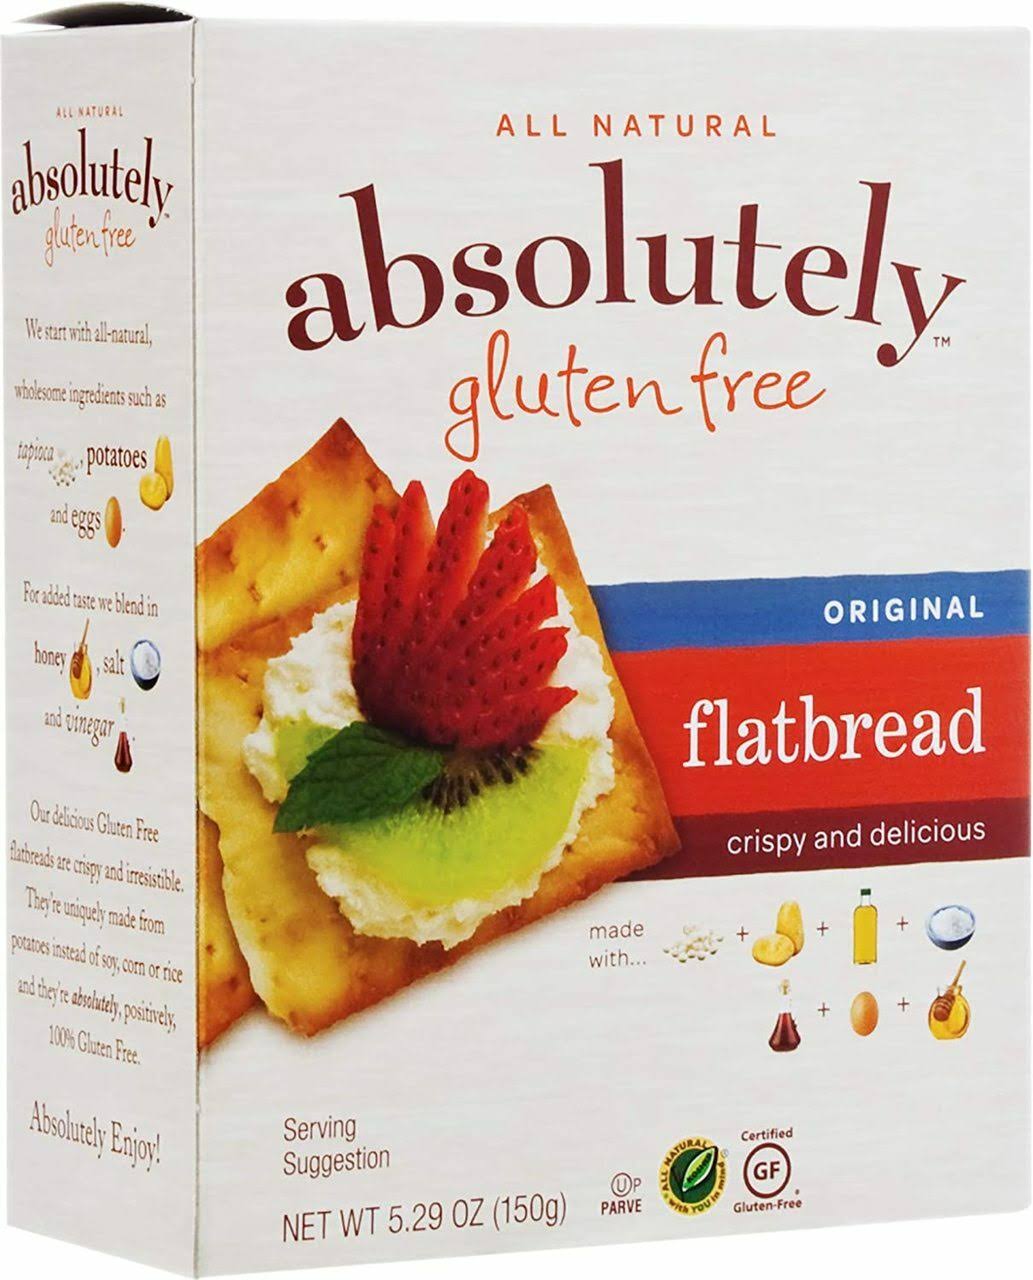 Absolutely Gluten Free Flatbread, Original - 5.29 oz box